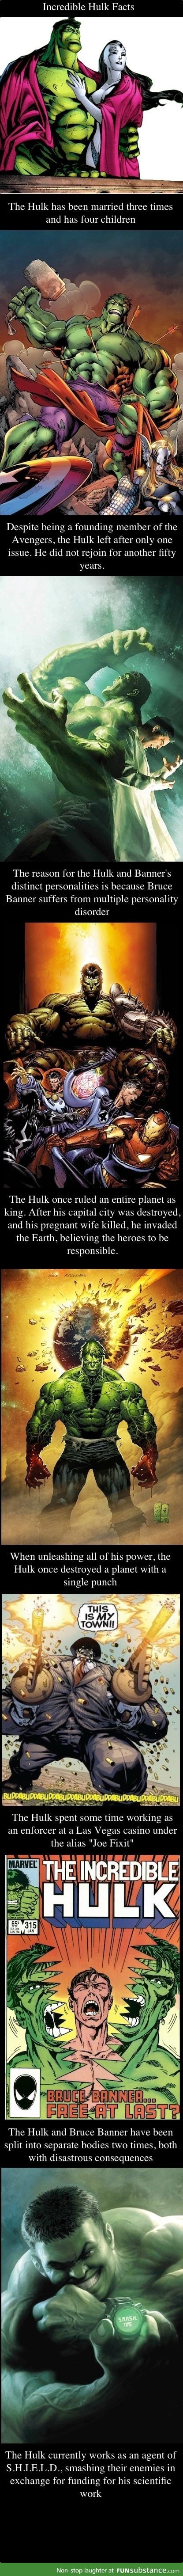 Incredible hulk facts compilation